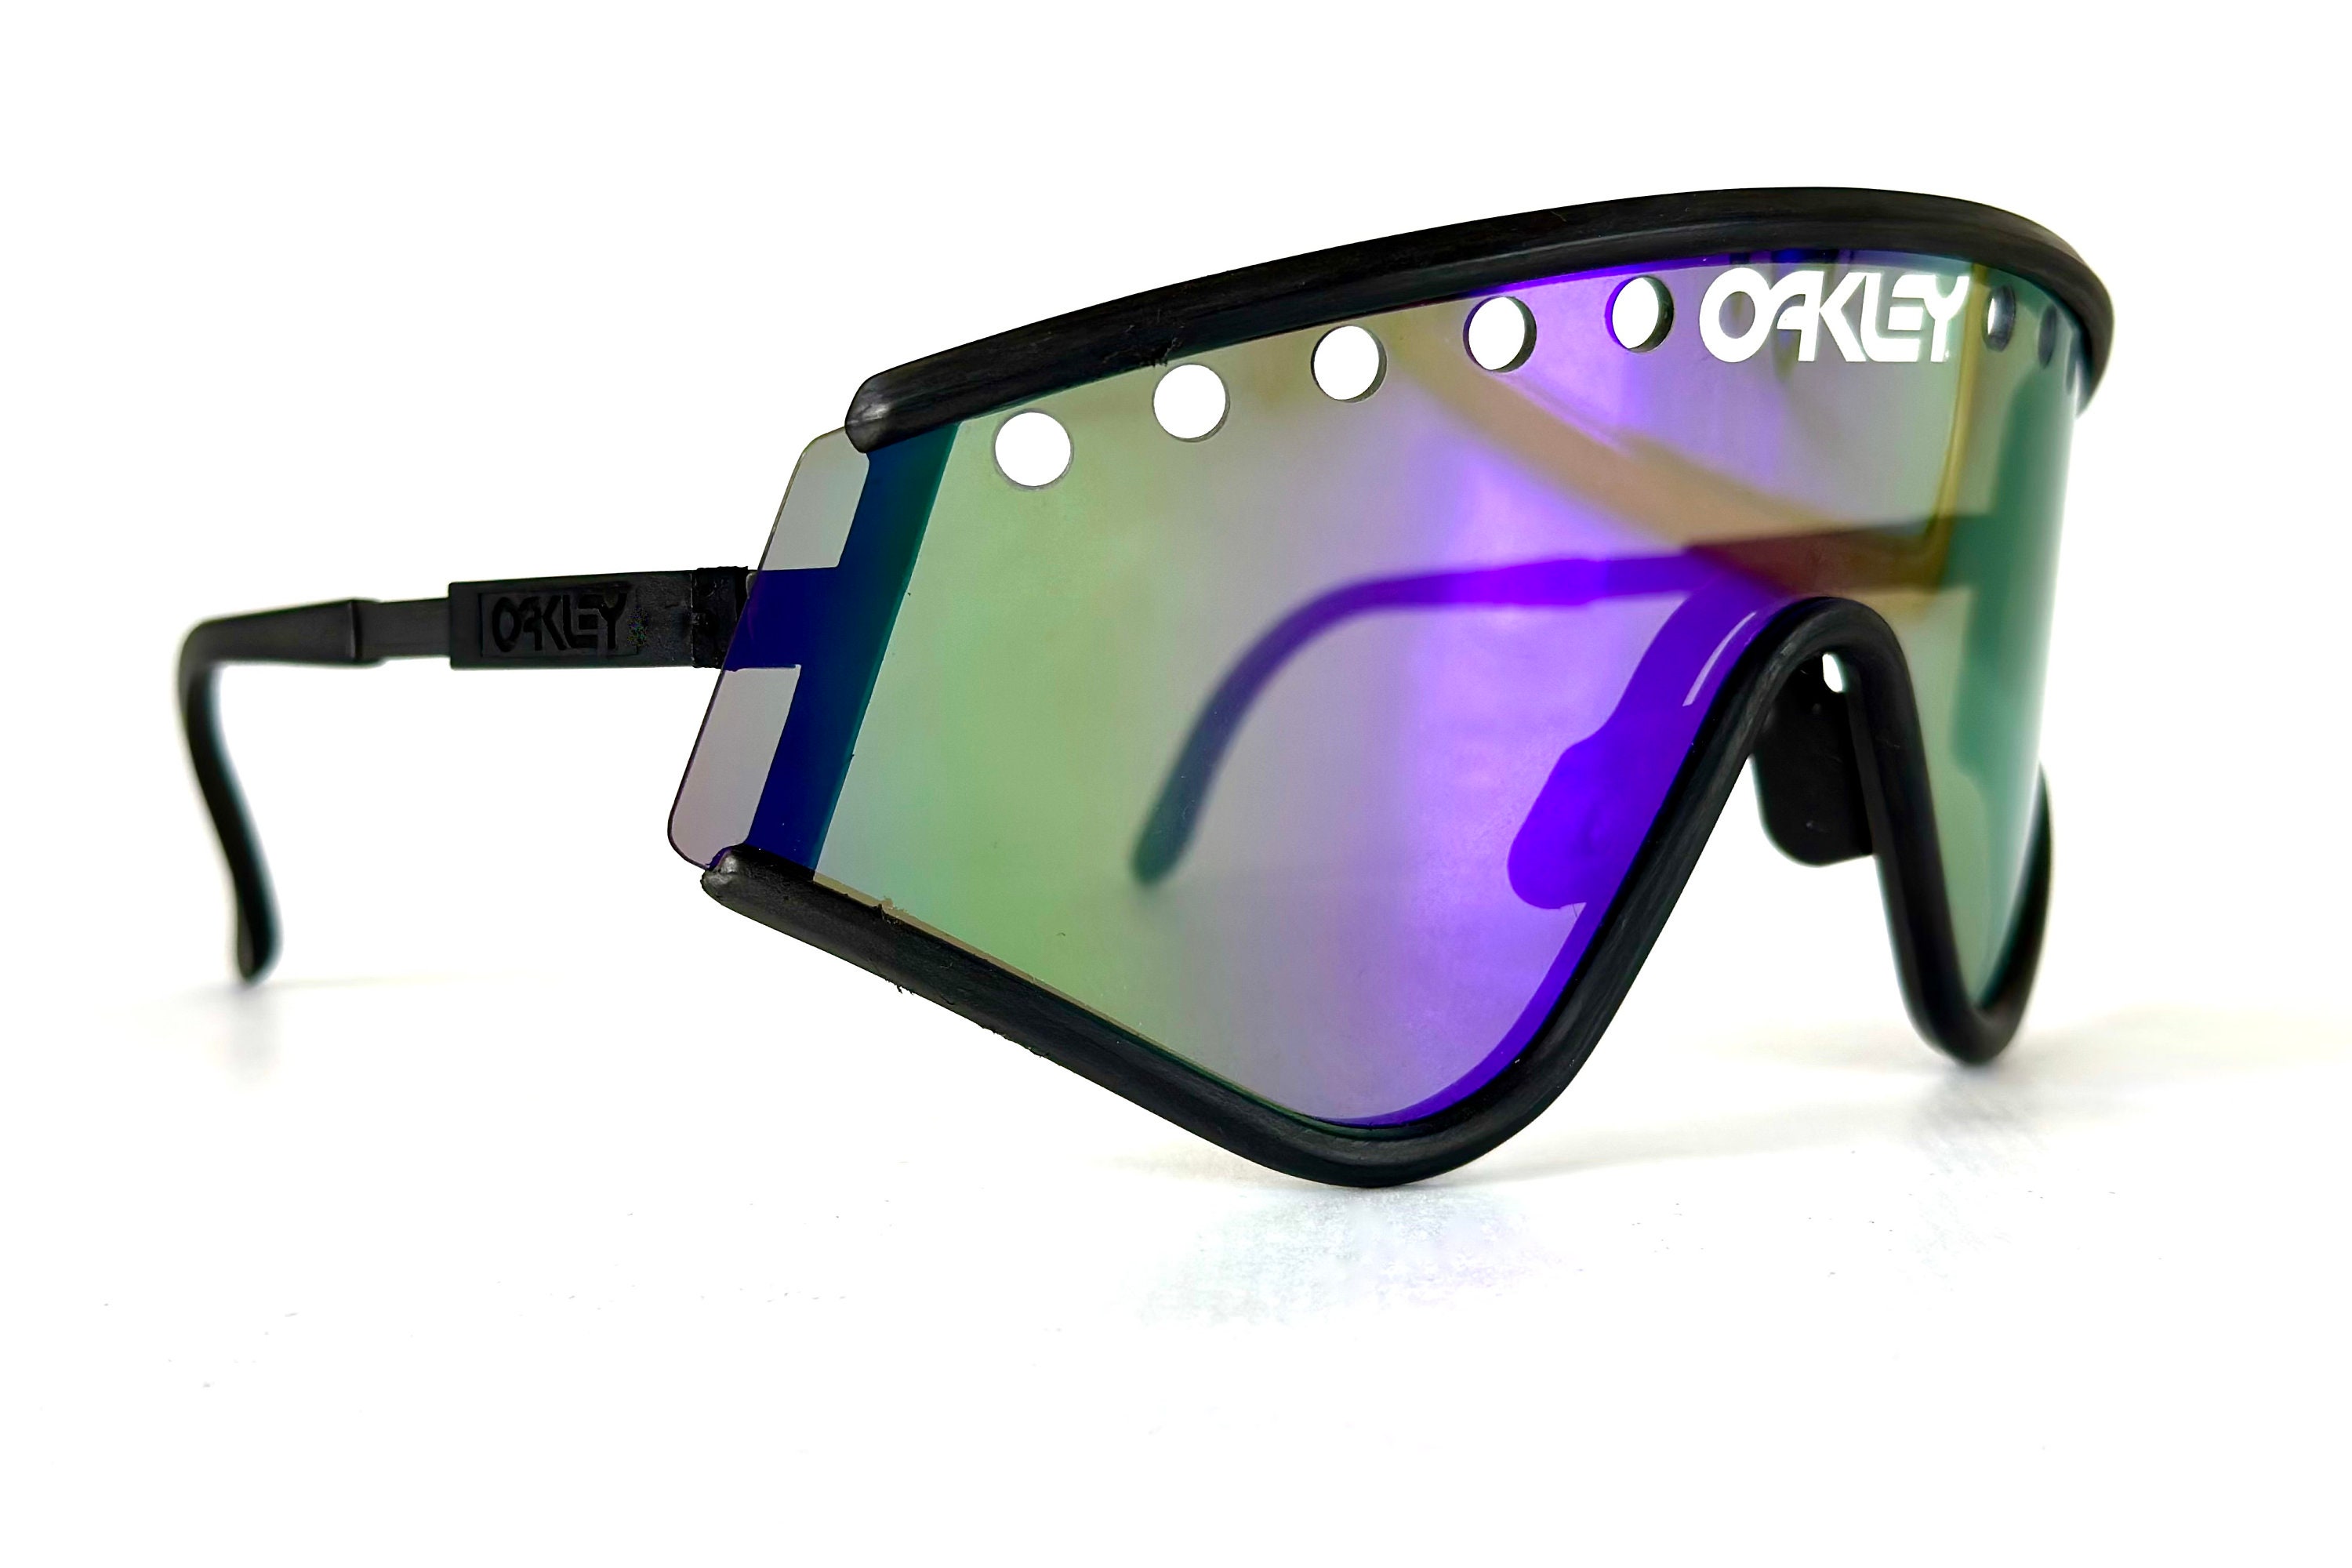 Vintage 1988 Oakley Factory Pilot Eyeshade Sunglasses Full Set Including Vented Violet Iridium